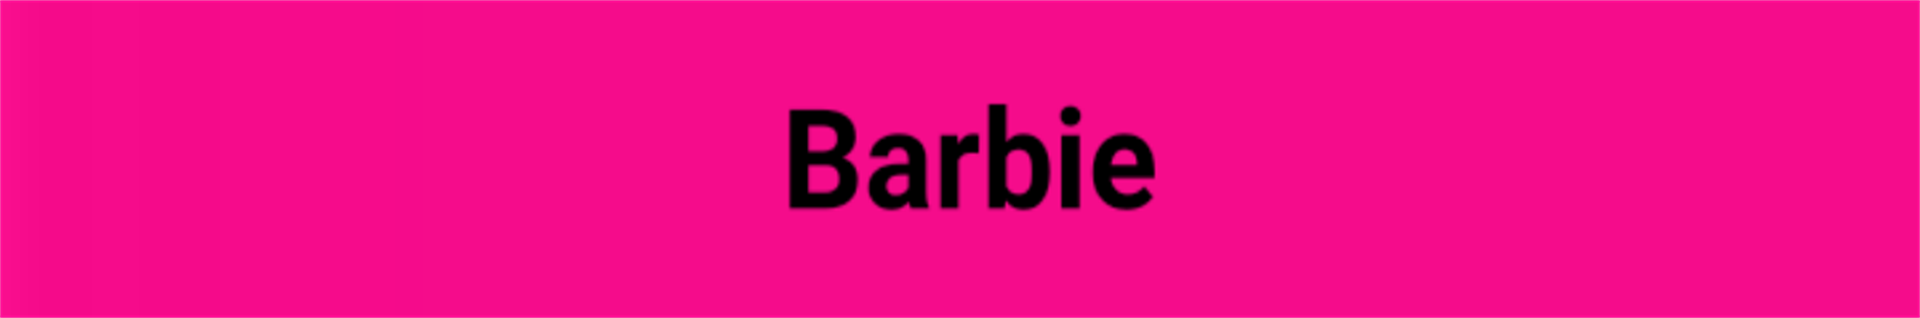 barbie toon